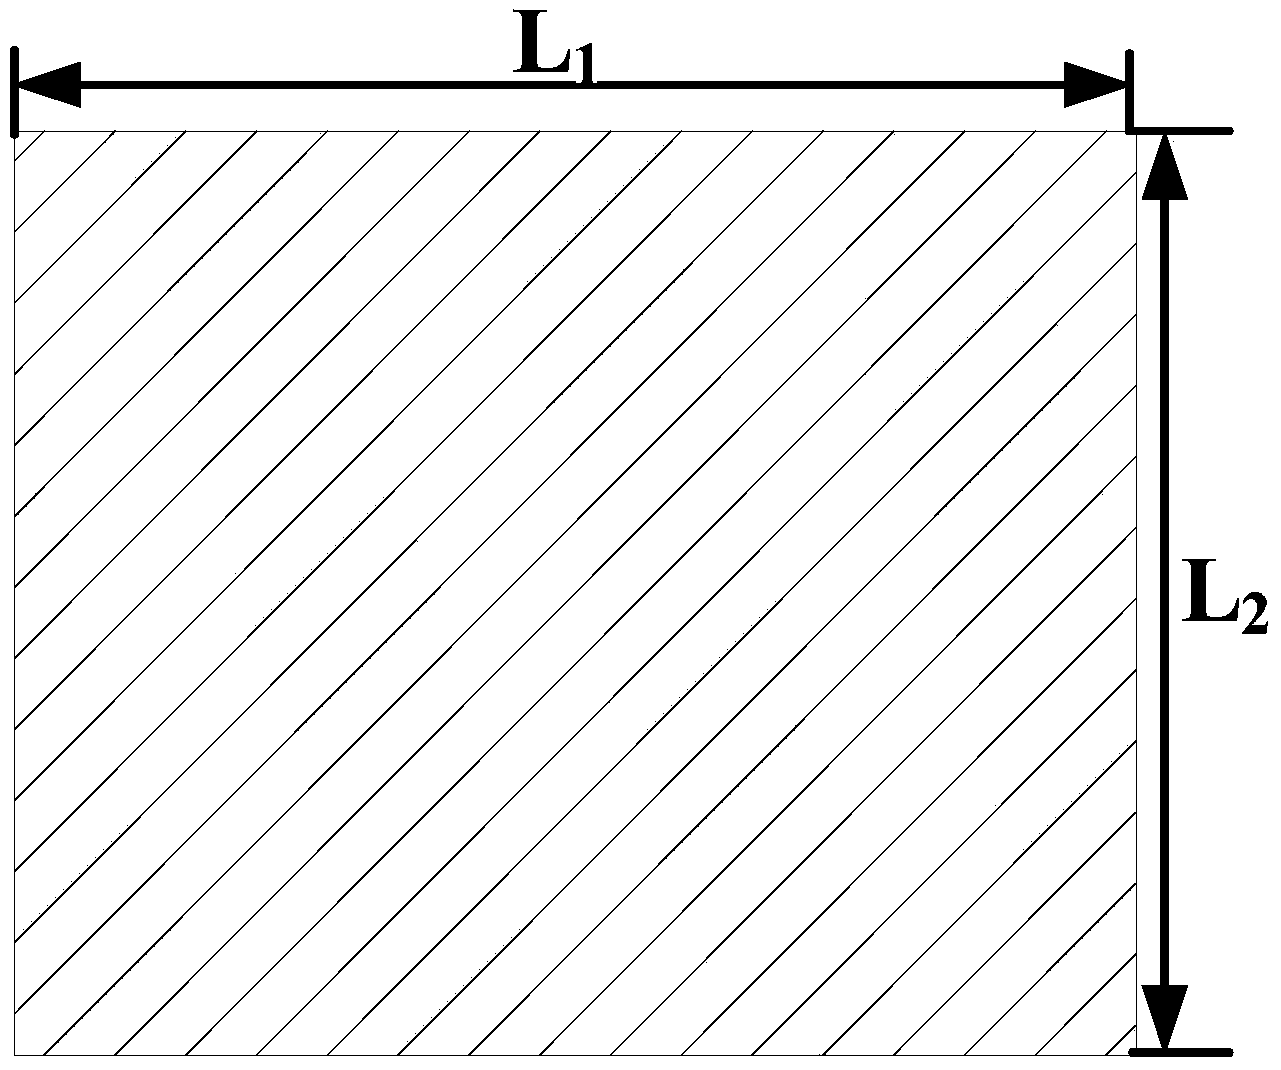 LTCC filtering Balun based on resonator coupling